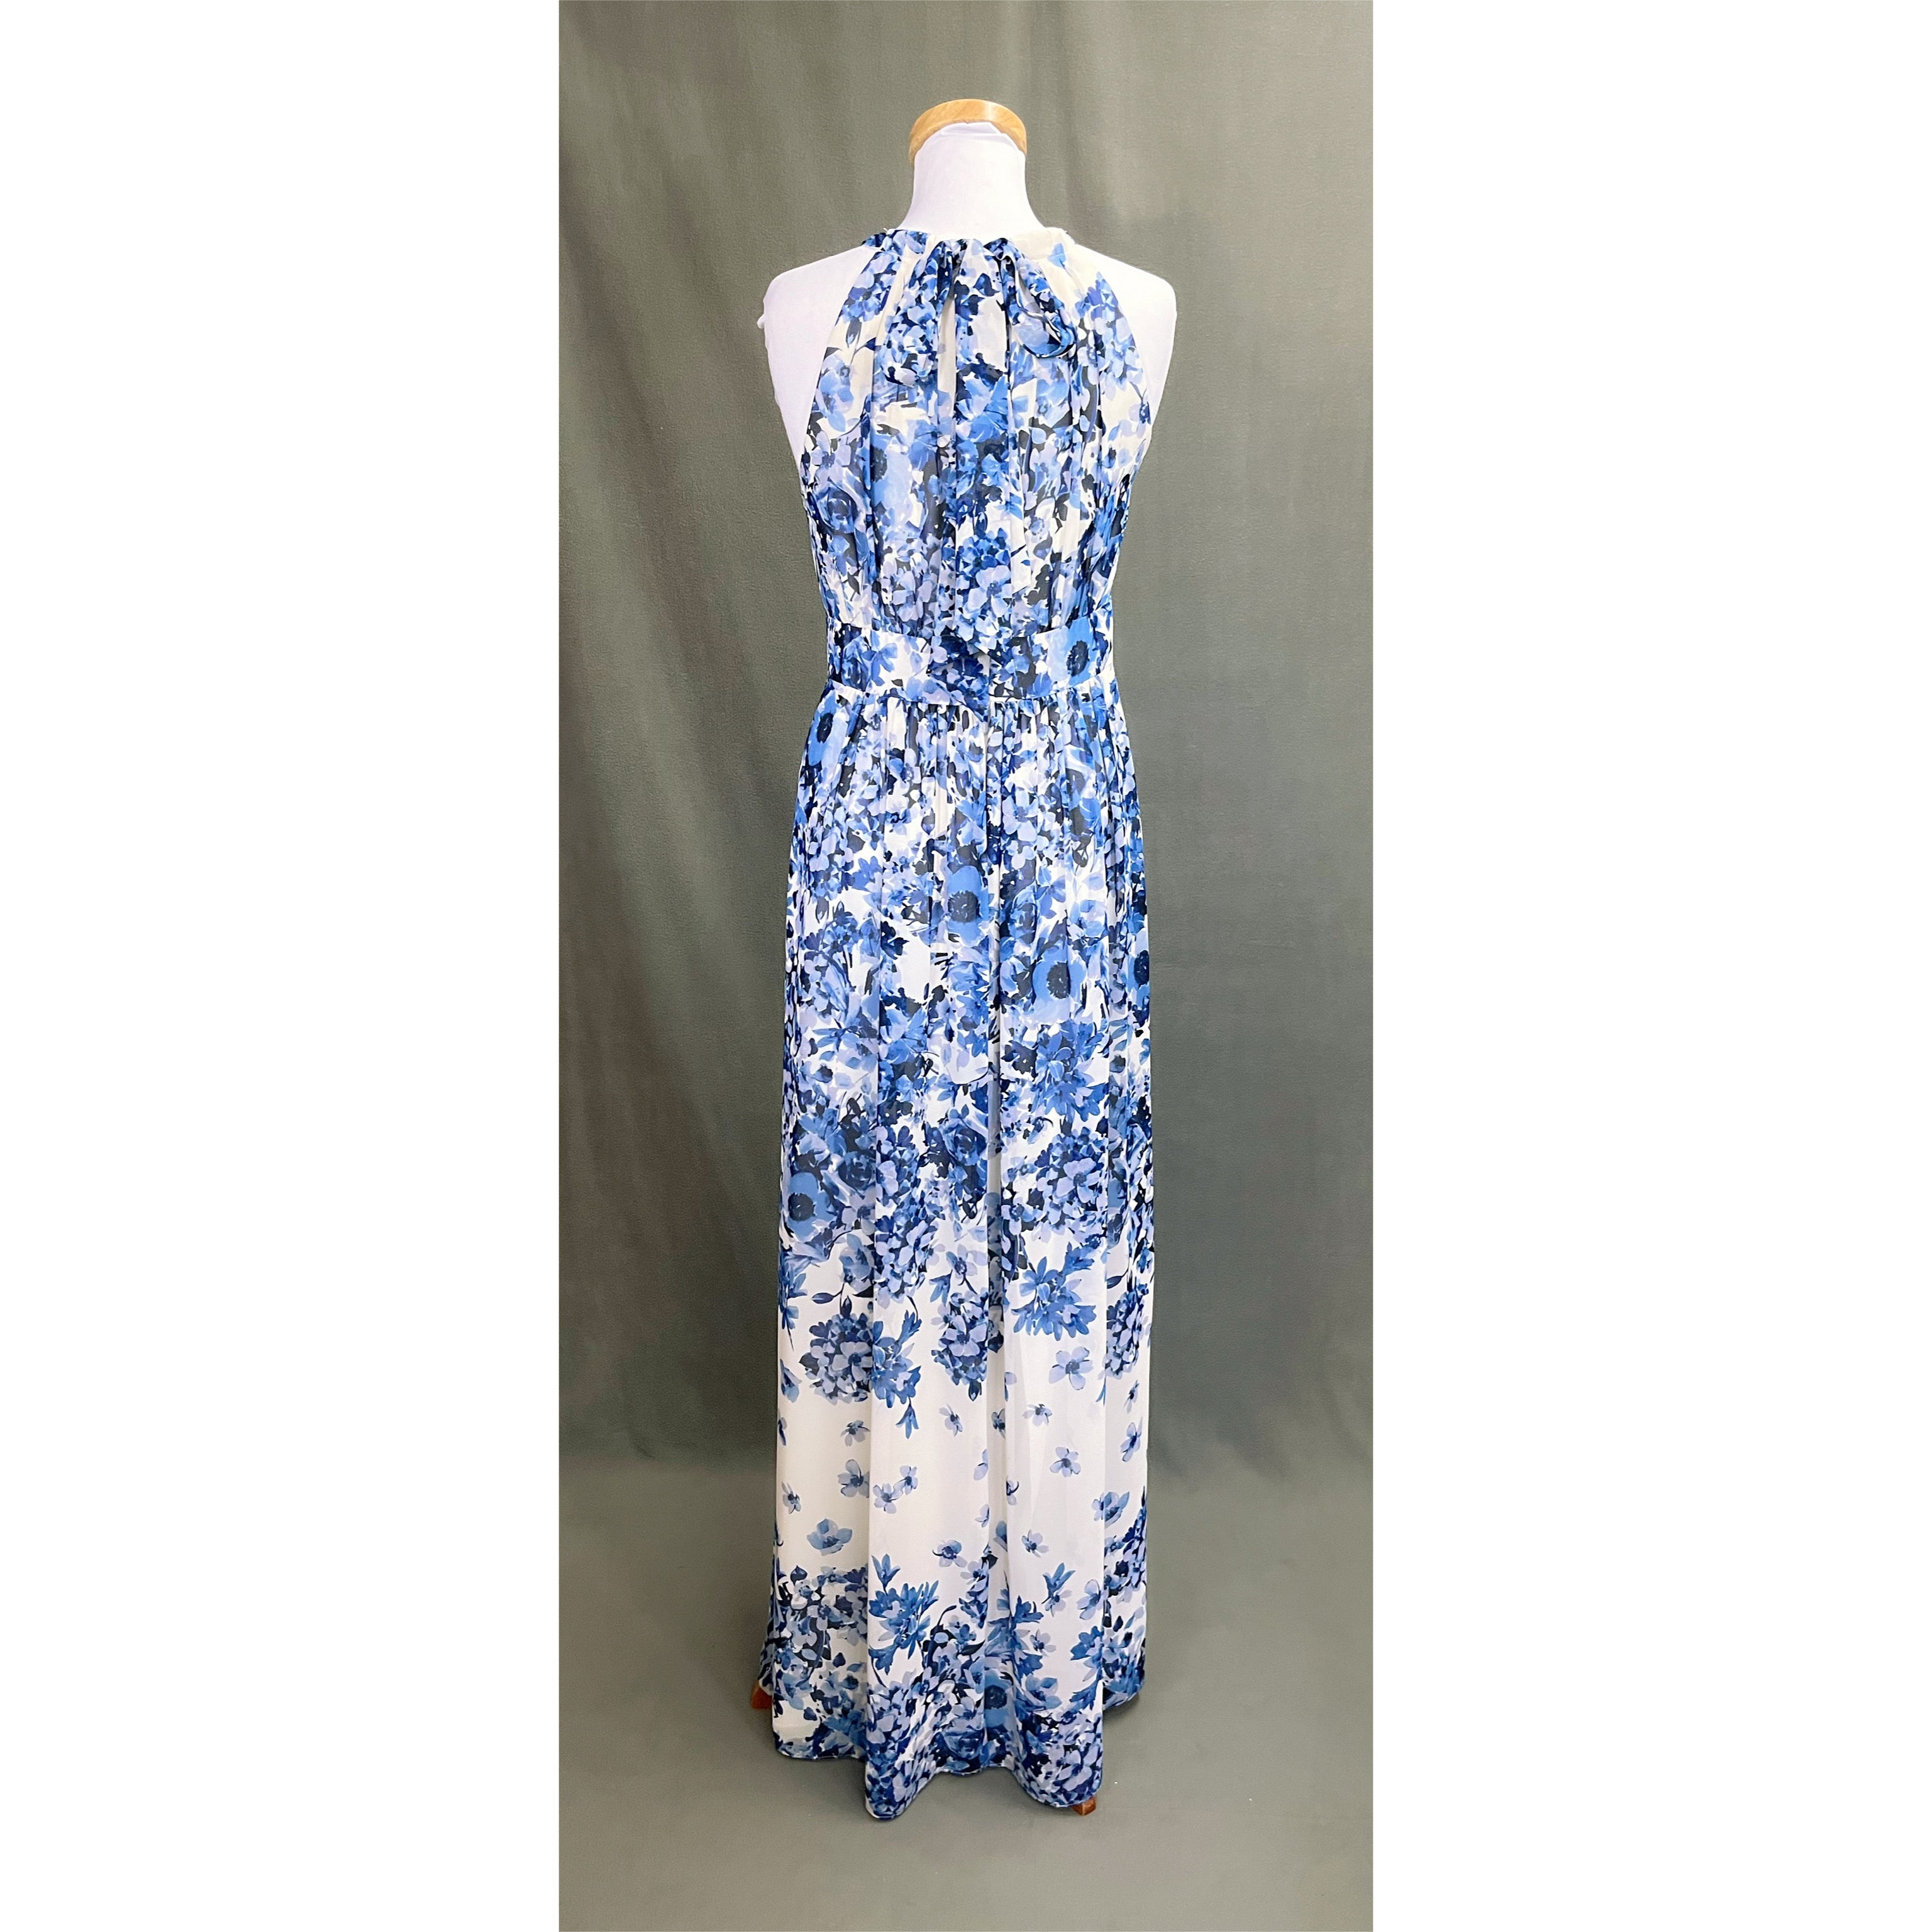 Eliza J. blue floral dress, size 8